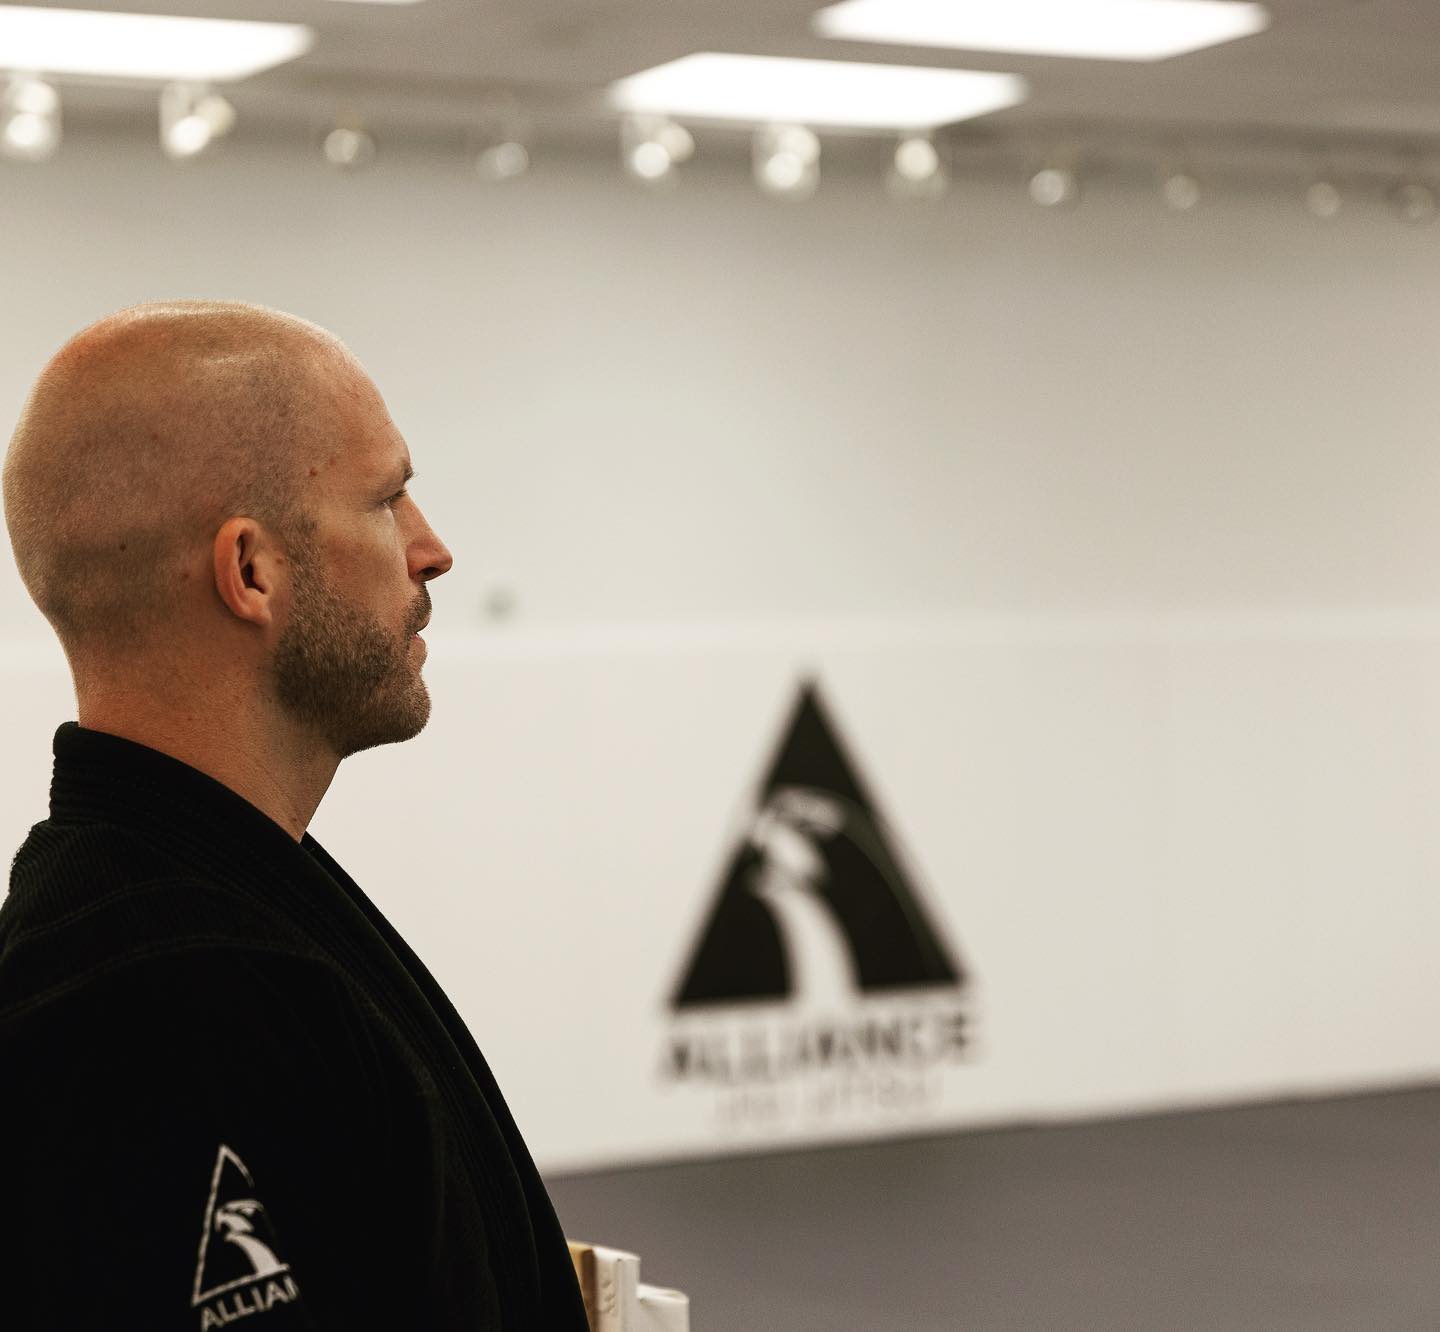 Alliance Brazilian Jiu-Jitsu Minneapolis - The home of team